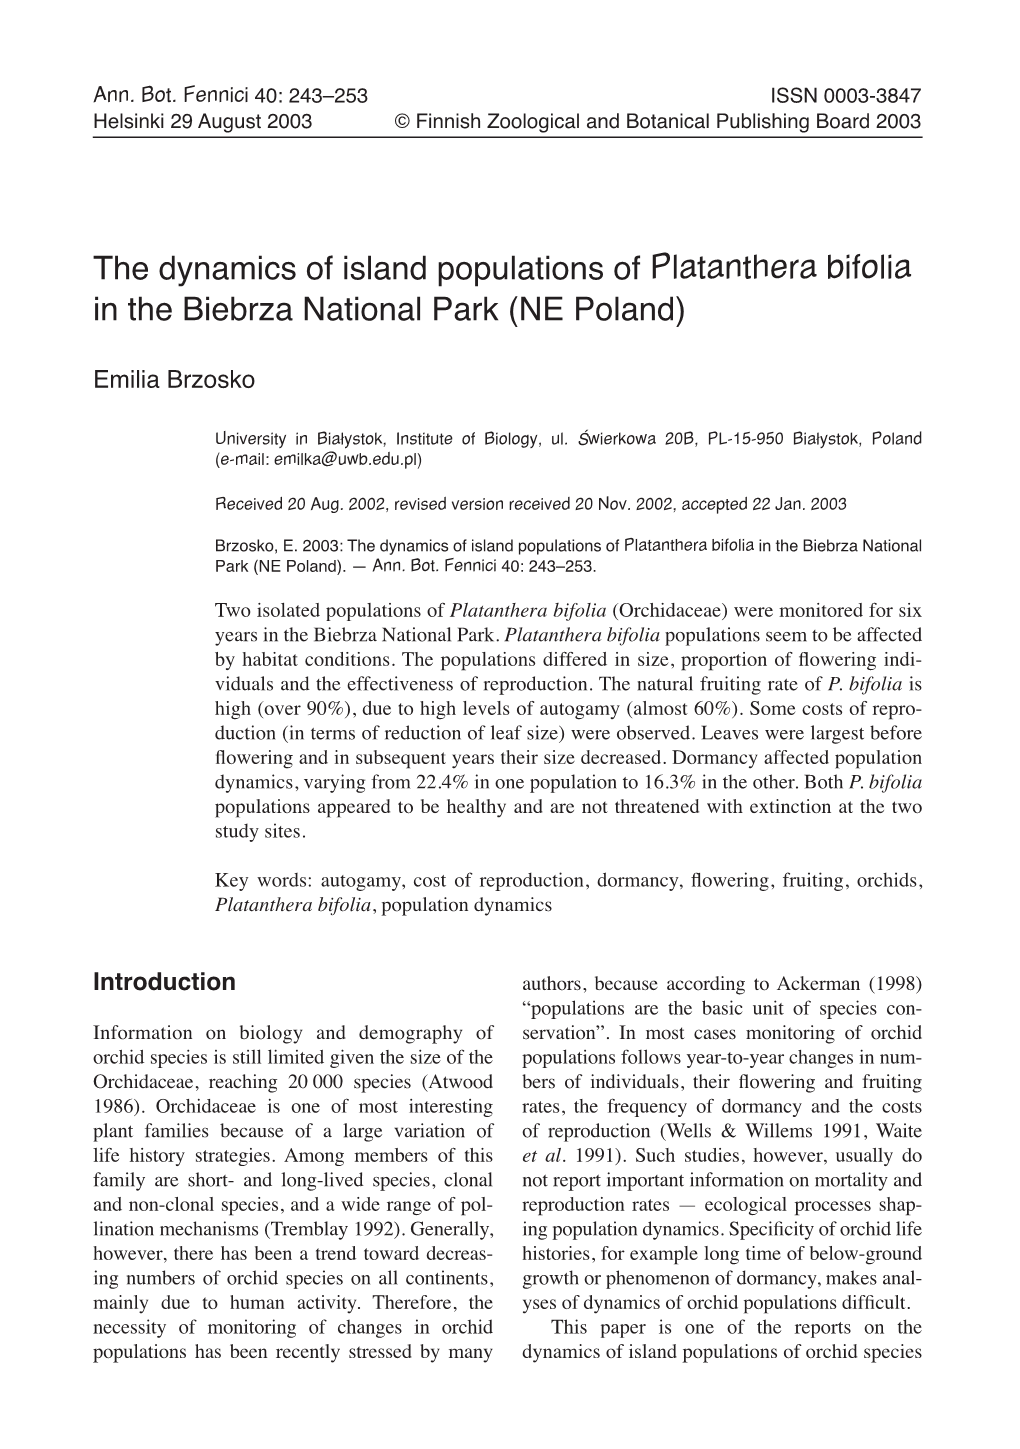 The Dynamics of Island Populations of Platanthera Bifolia in the Biebrza National Park (NE Poland)